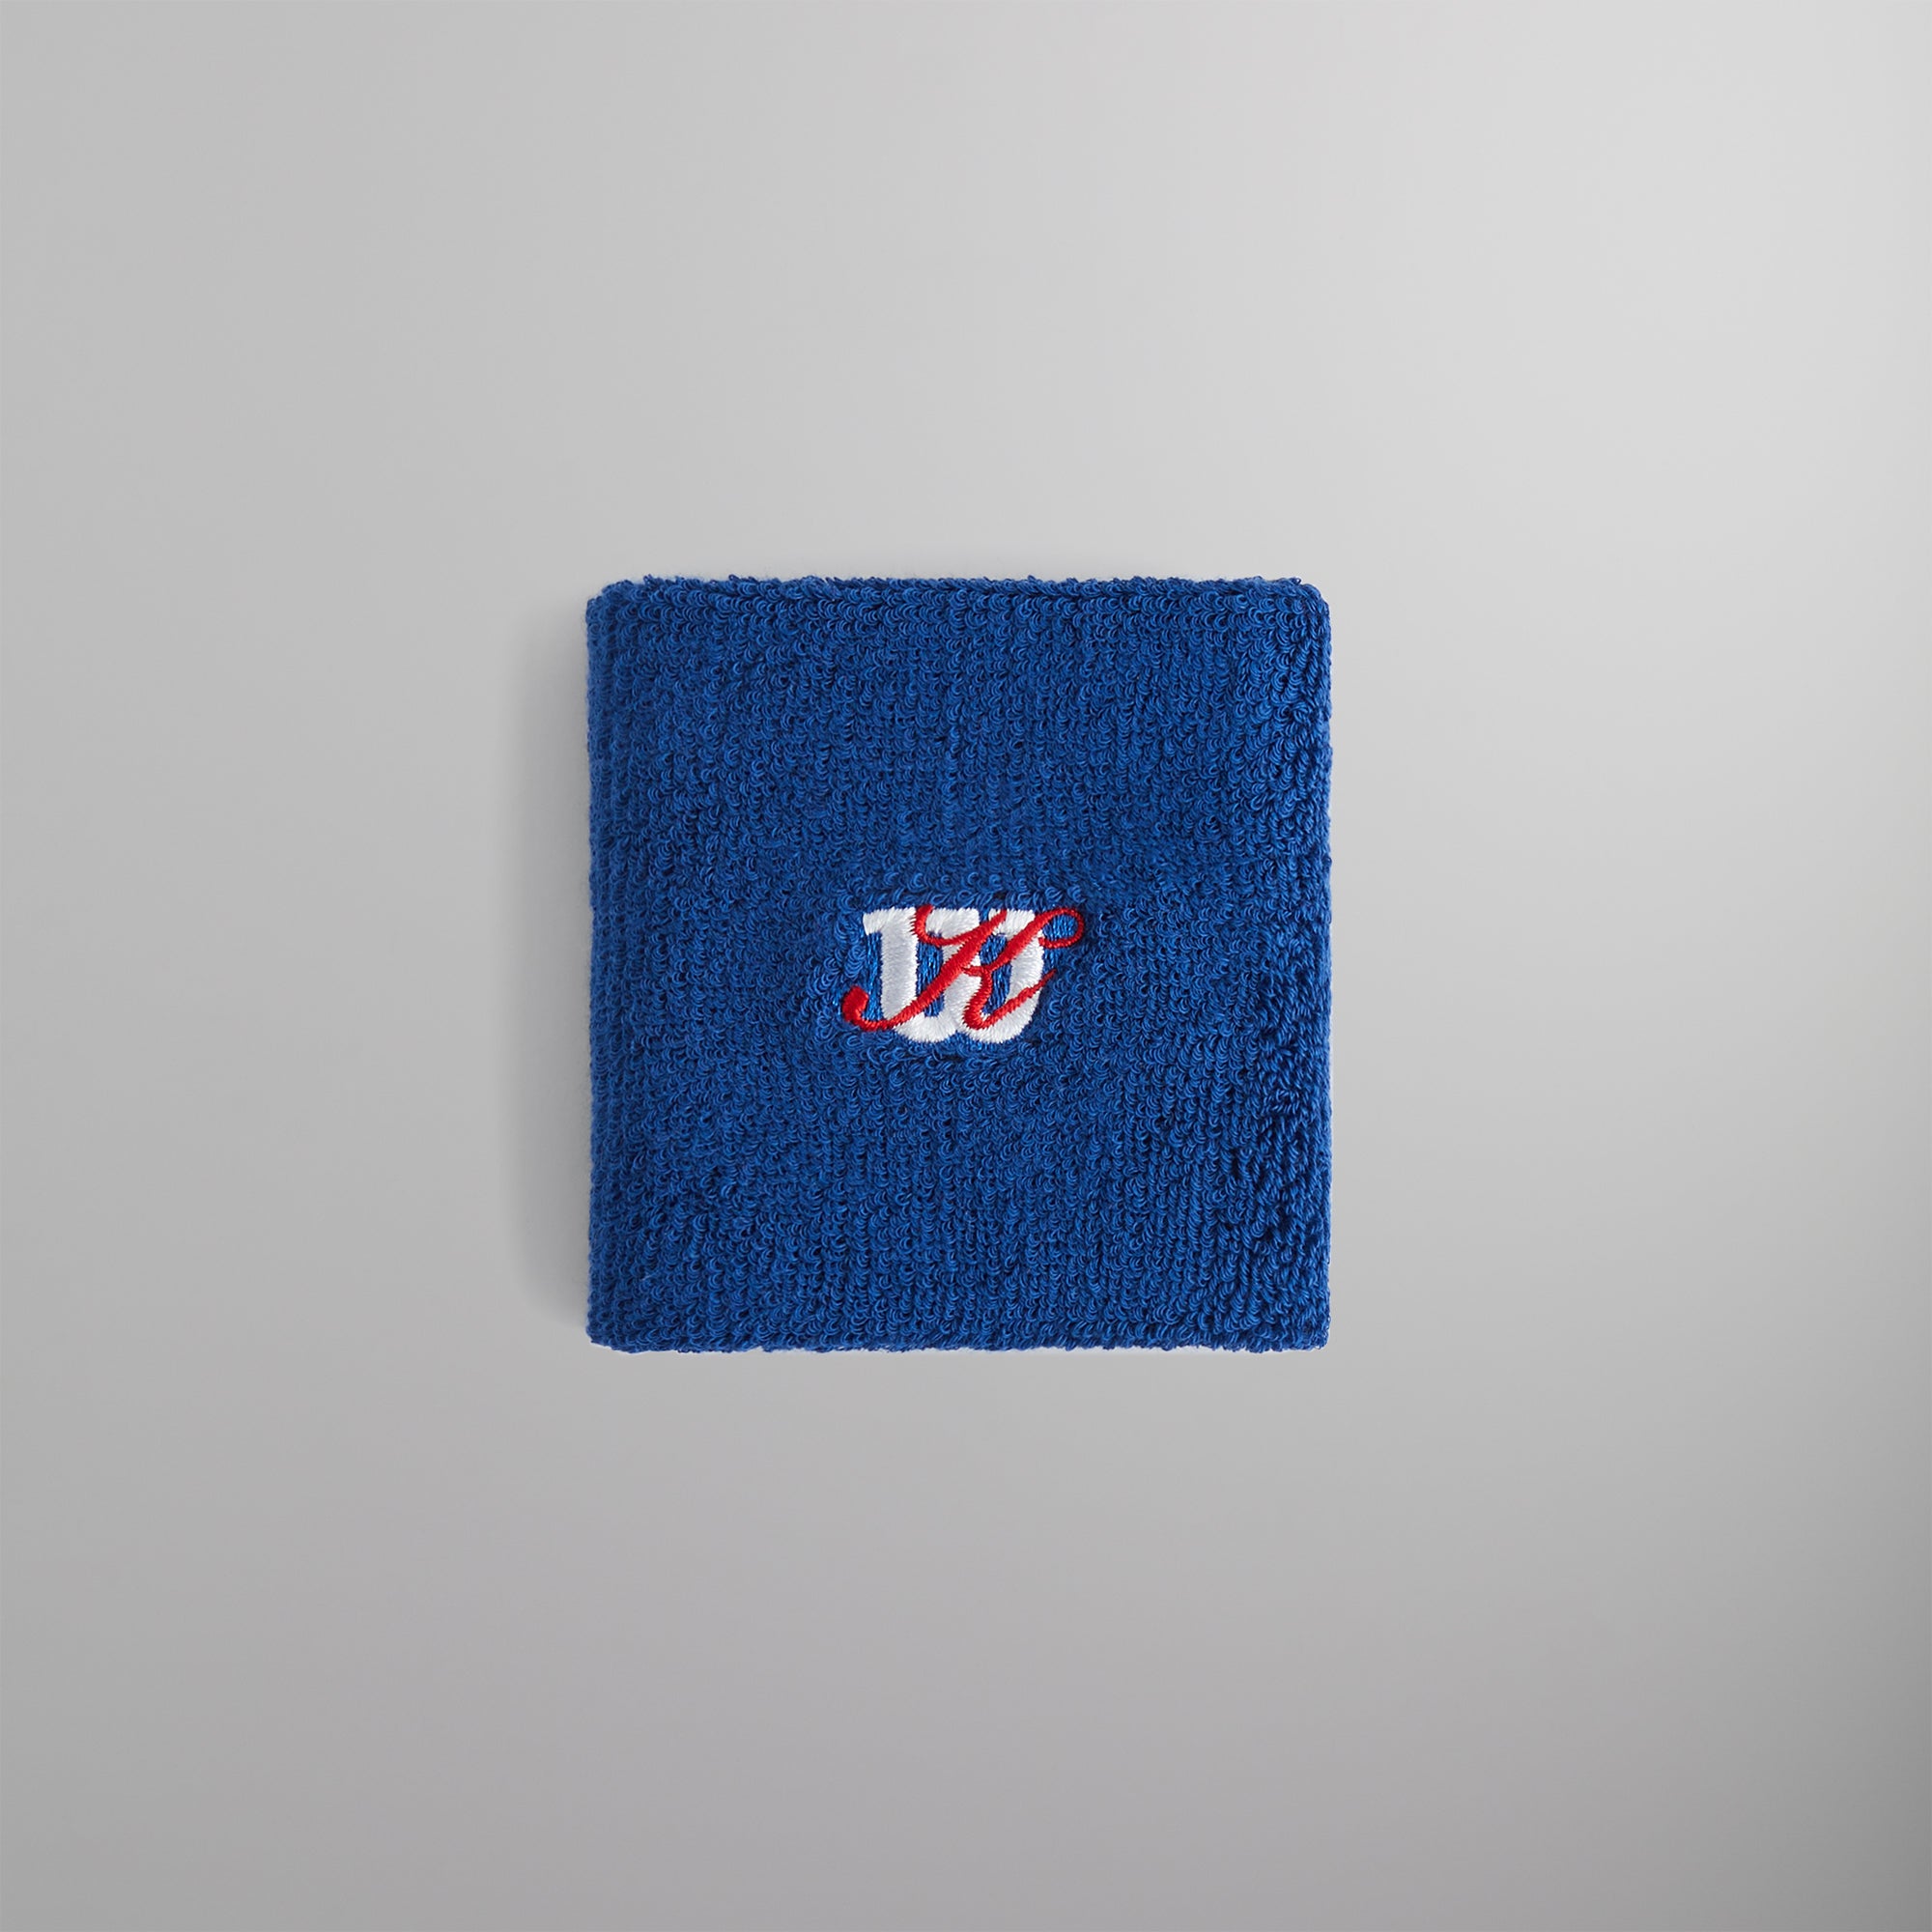 Kith for Wilson W Wristband - Blue Quartz